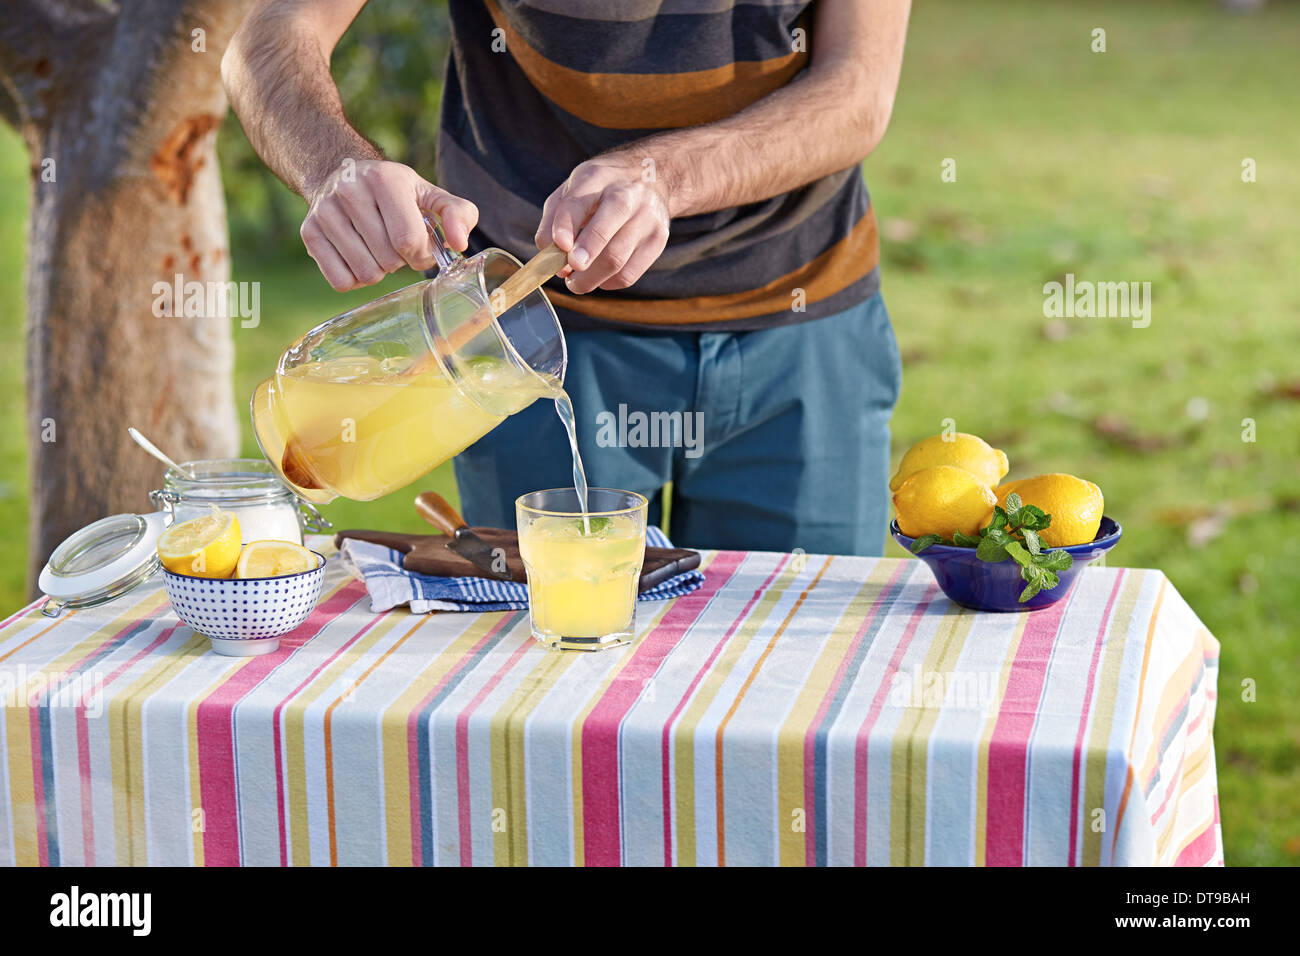 Pouring homemade lemonade in glass at garden table Stock Photo